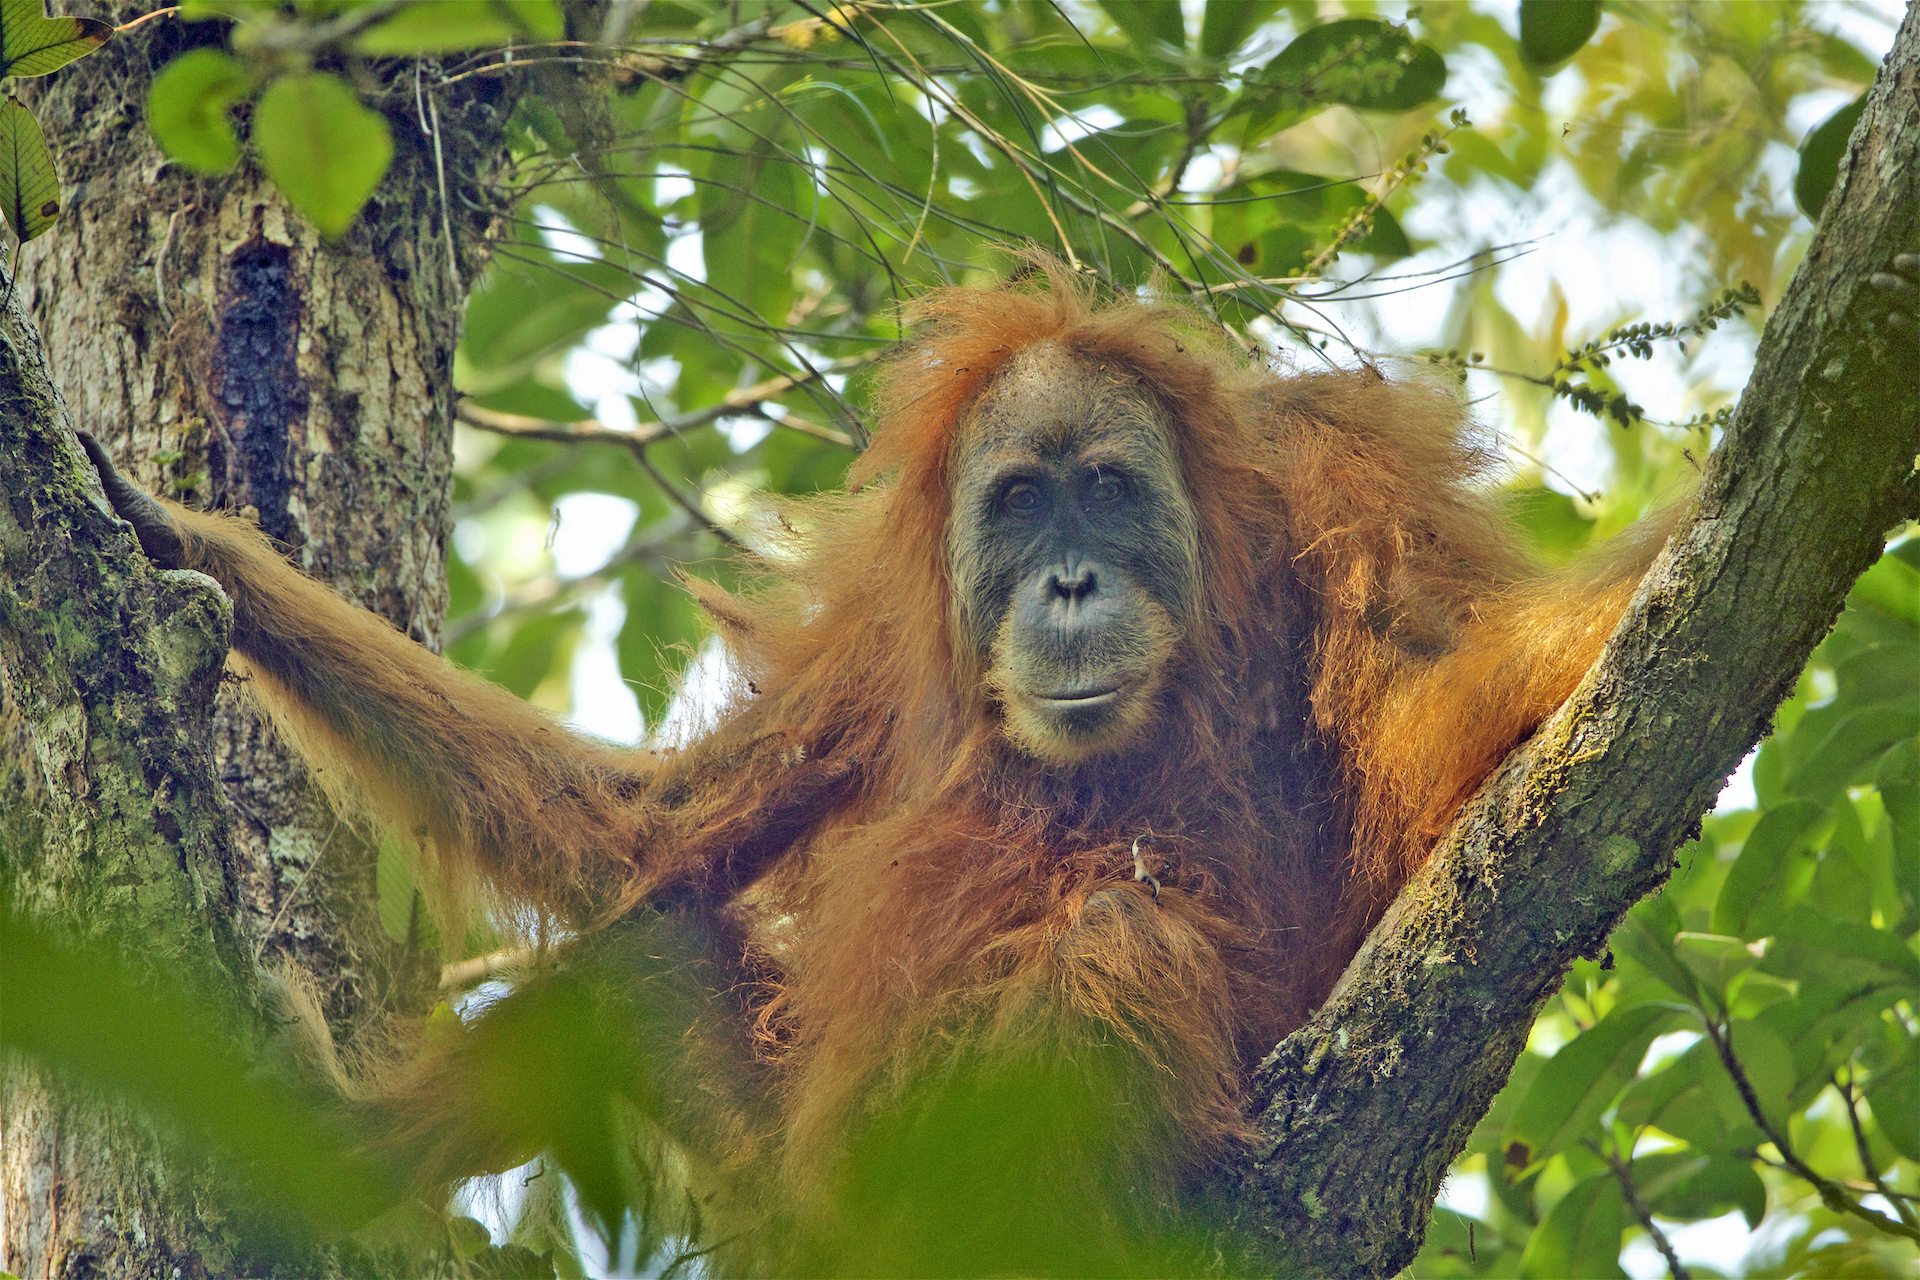 Adult female Pongo tapanuliensis at Batang Toru Forest Sumatran Orangutan Conservation Project, North Sumatran Province, Indonesia. PHOTO: Tim Laman / Wikimedia Commons